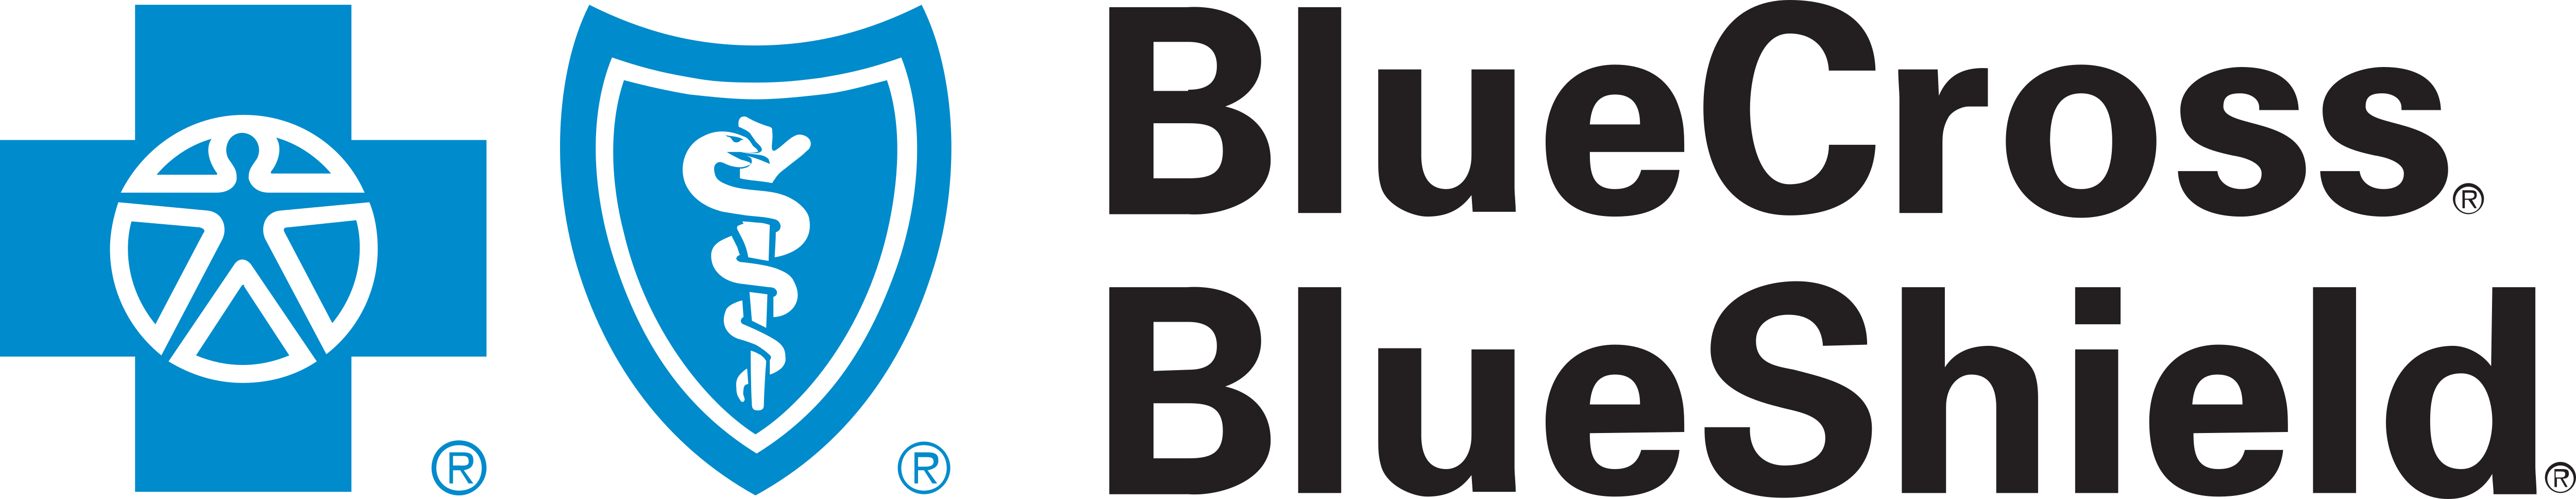 blue-cross-blue-shield-logos-download